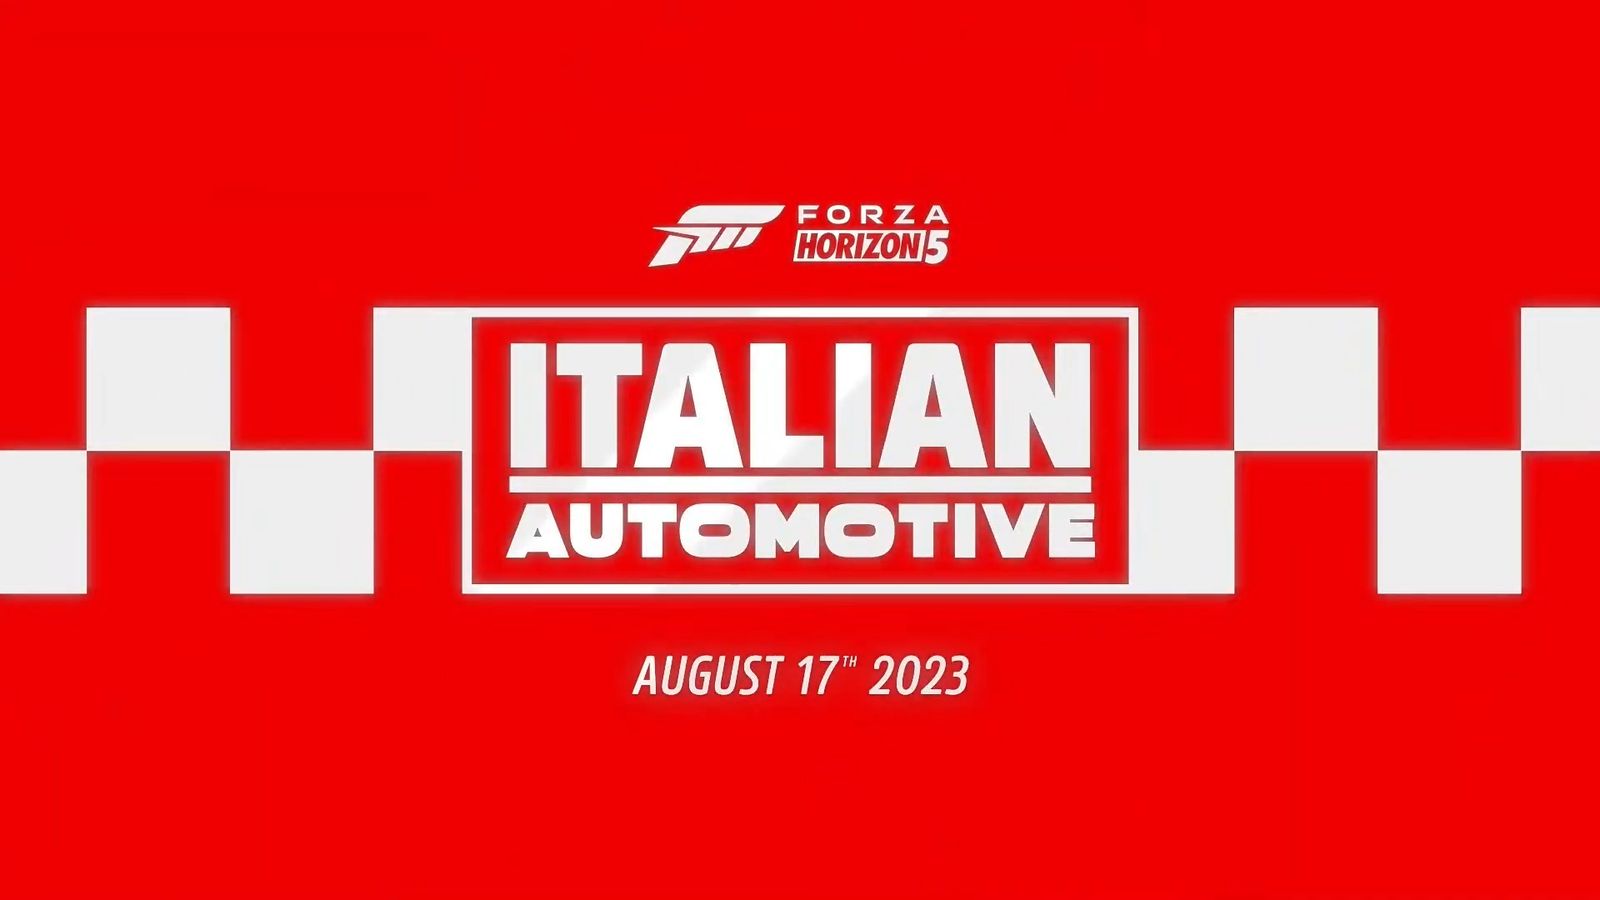 Forza Horizon 5 Italian Automotive teaser